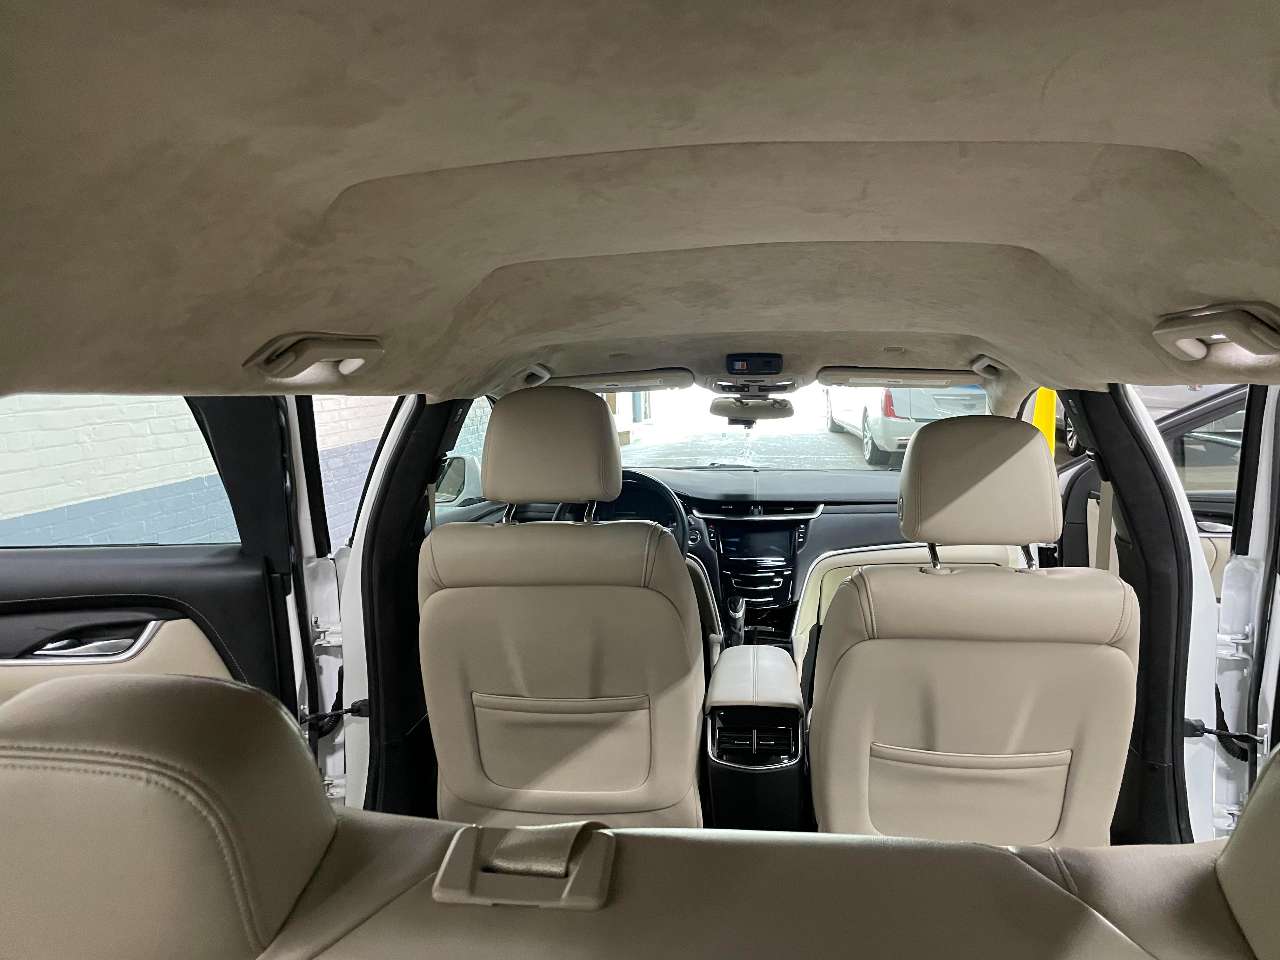 2019 Cadillac Eagle Kingsley Limousine 1695743834382